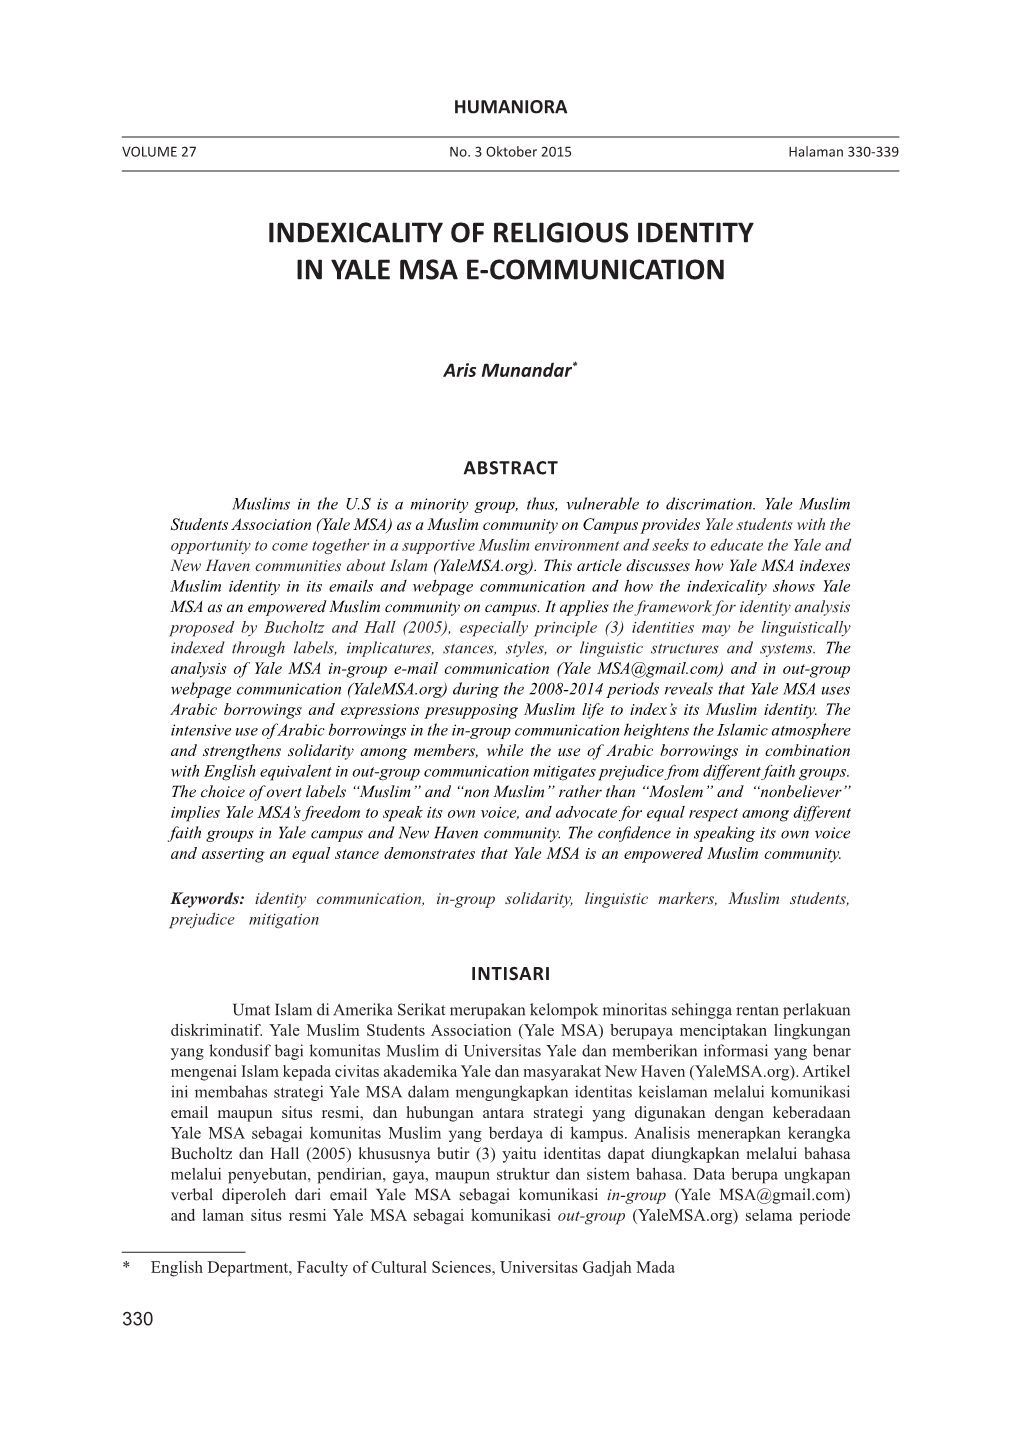 Indexicality of Religious Identity in Yale Msa E-Communication